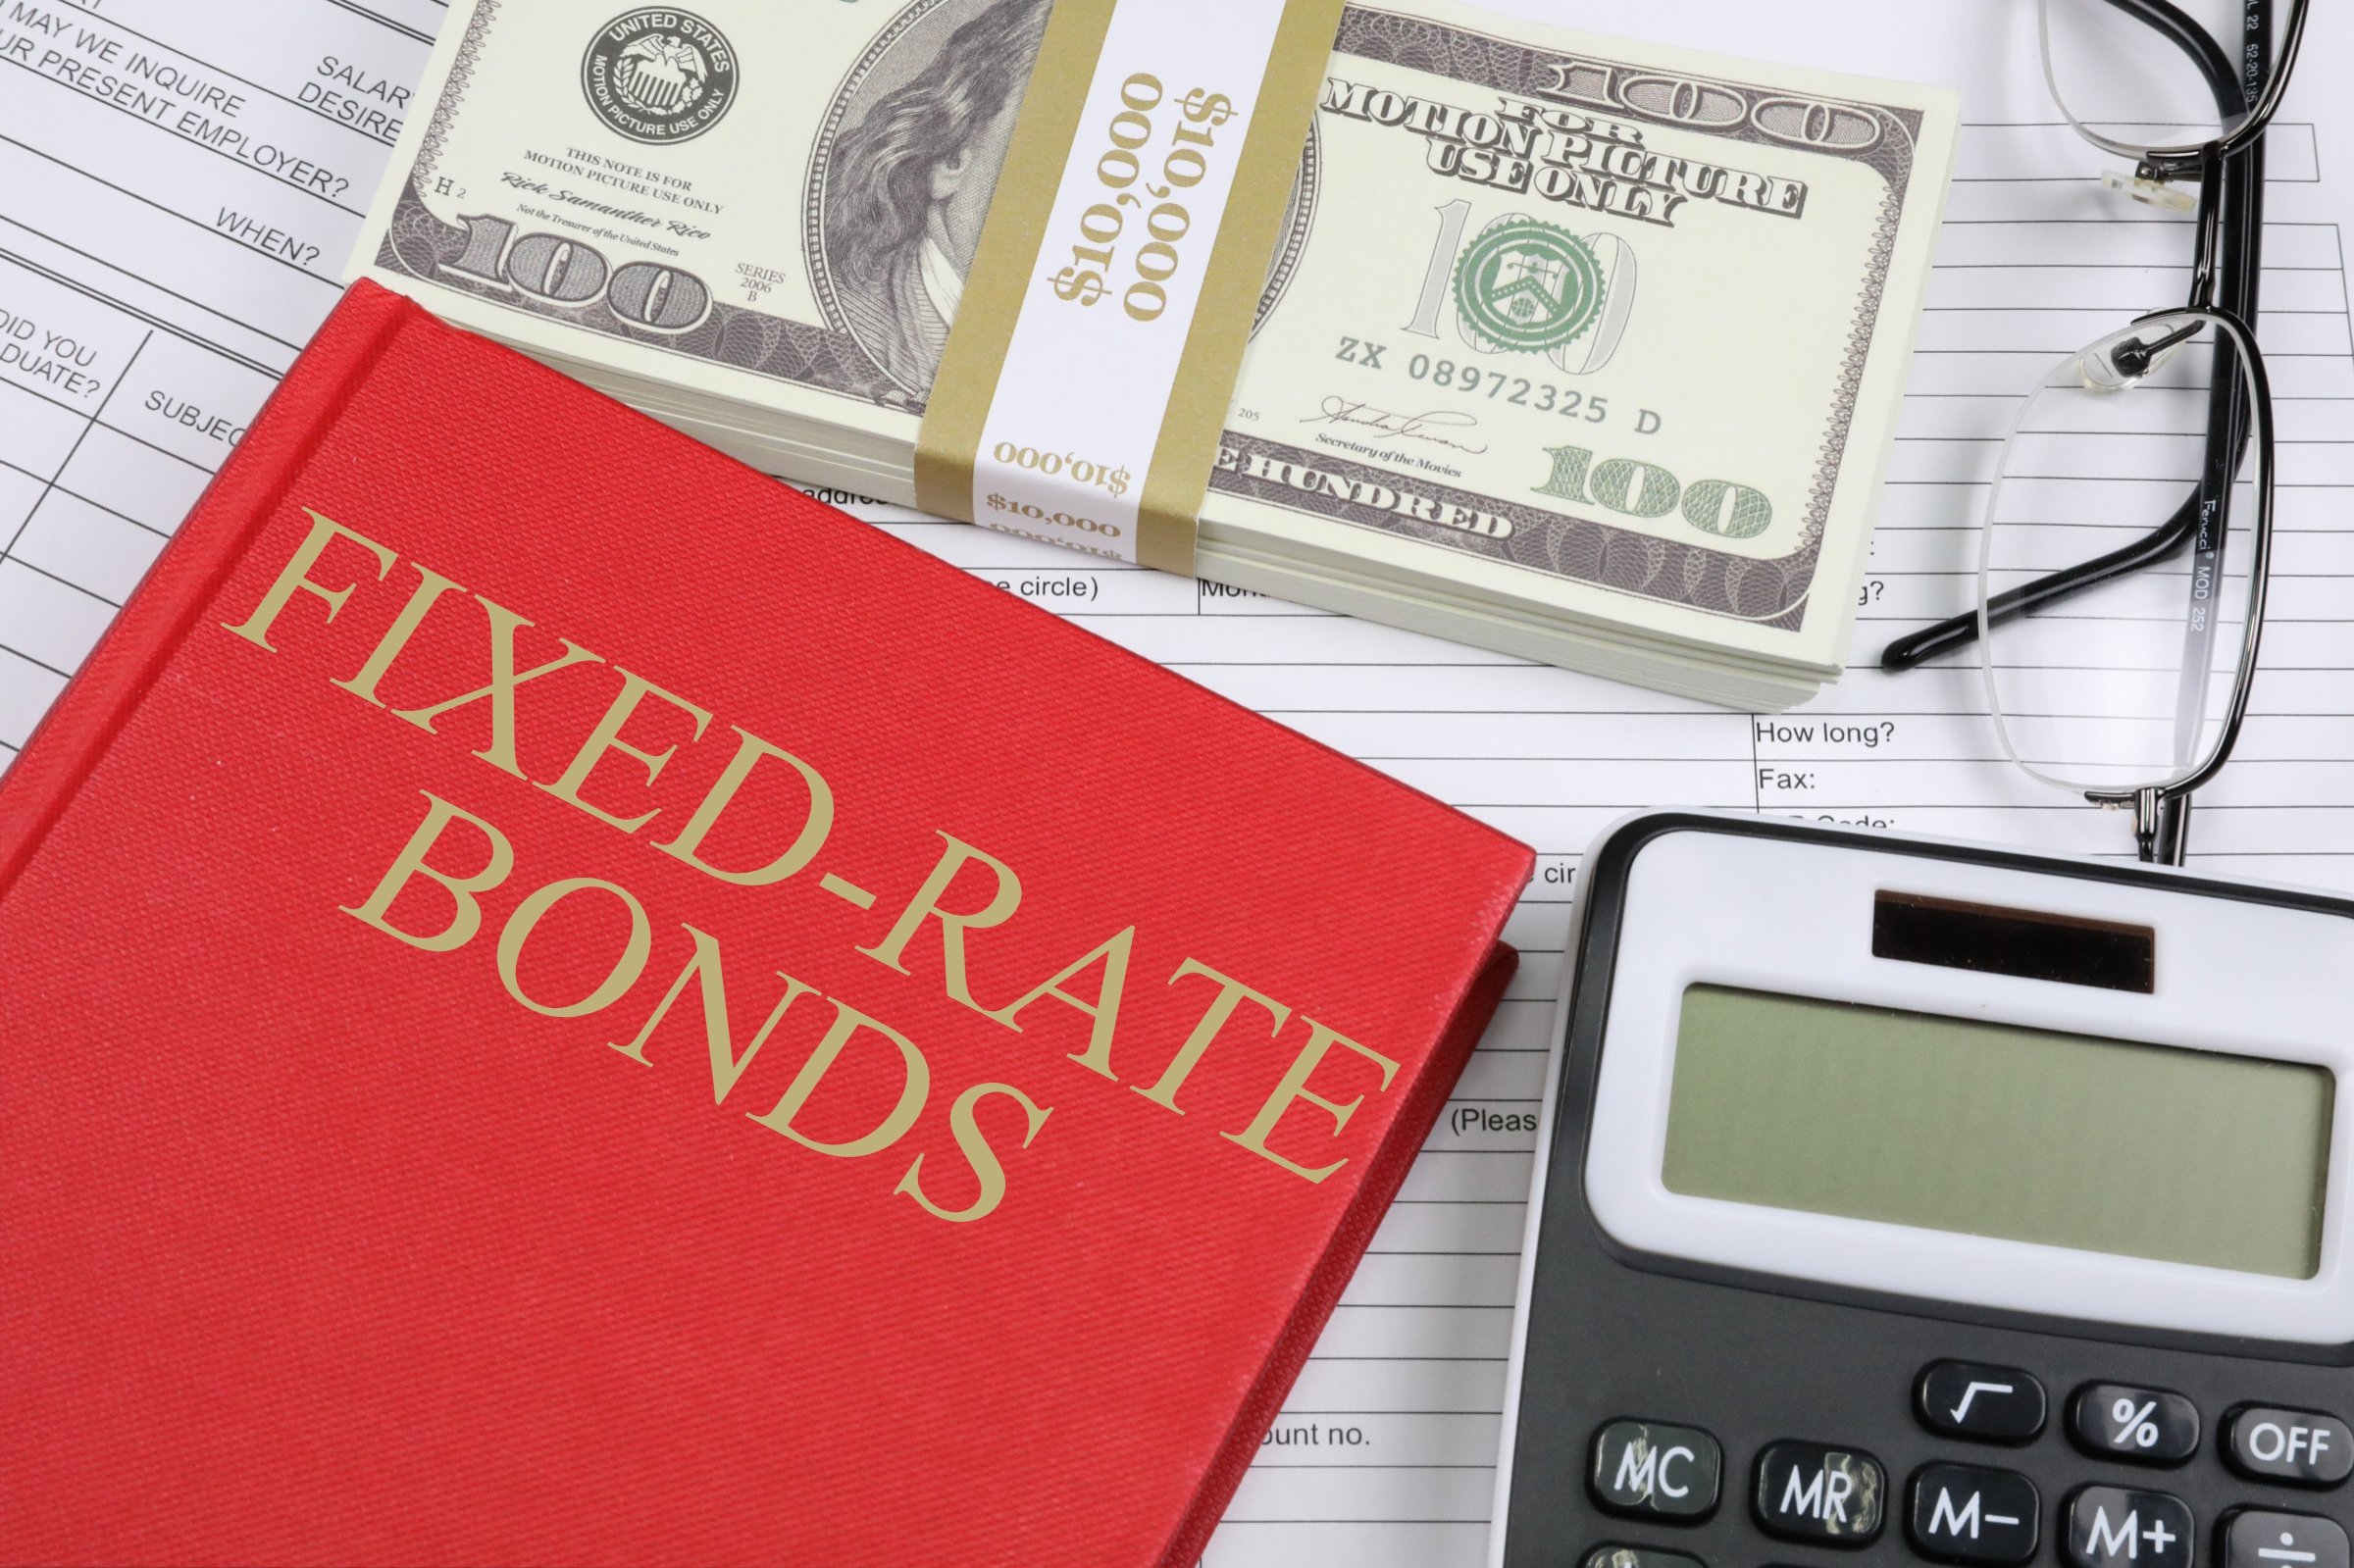 fixed rate bonds